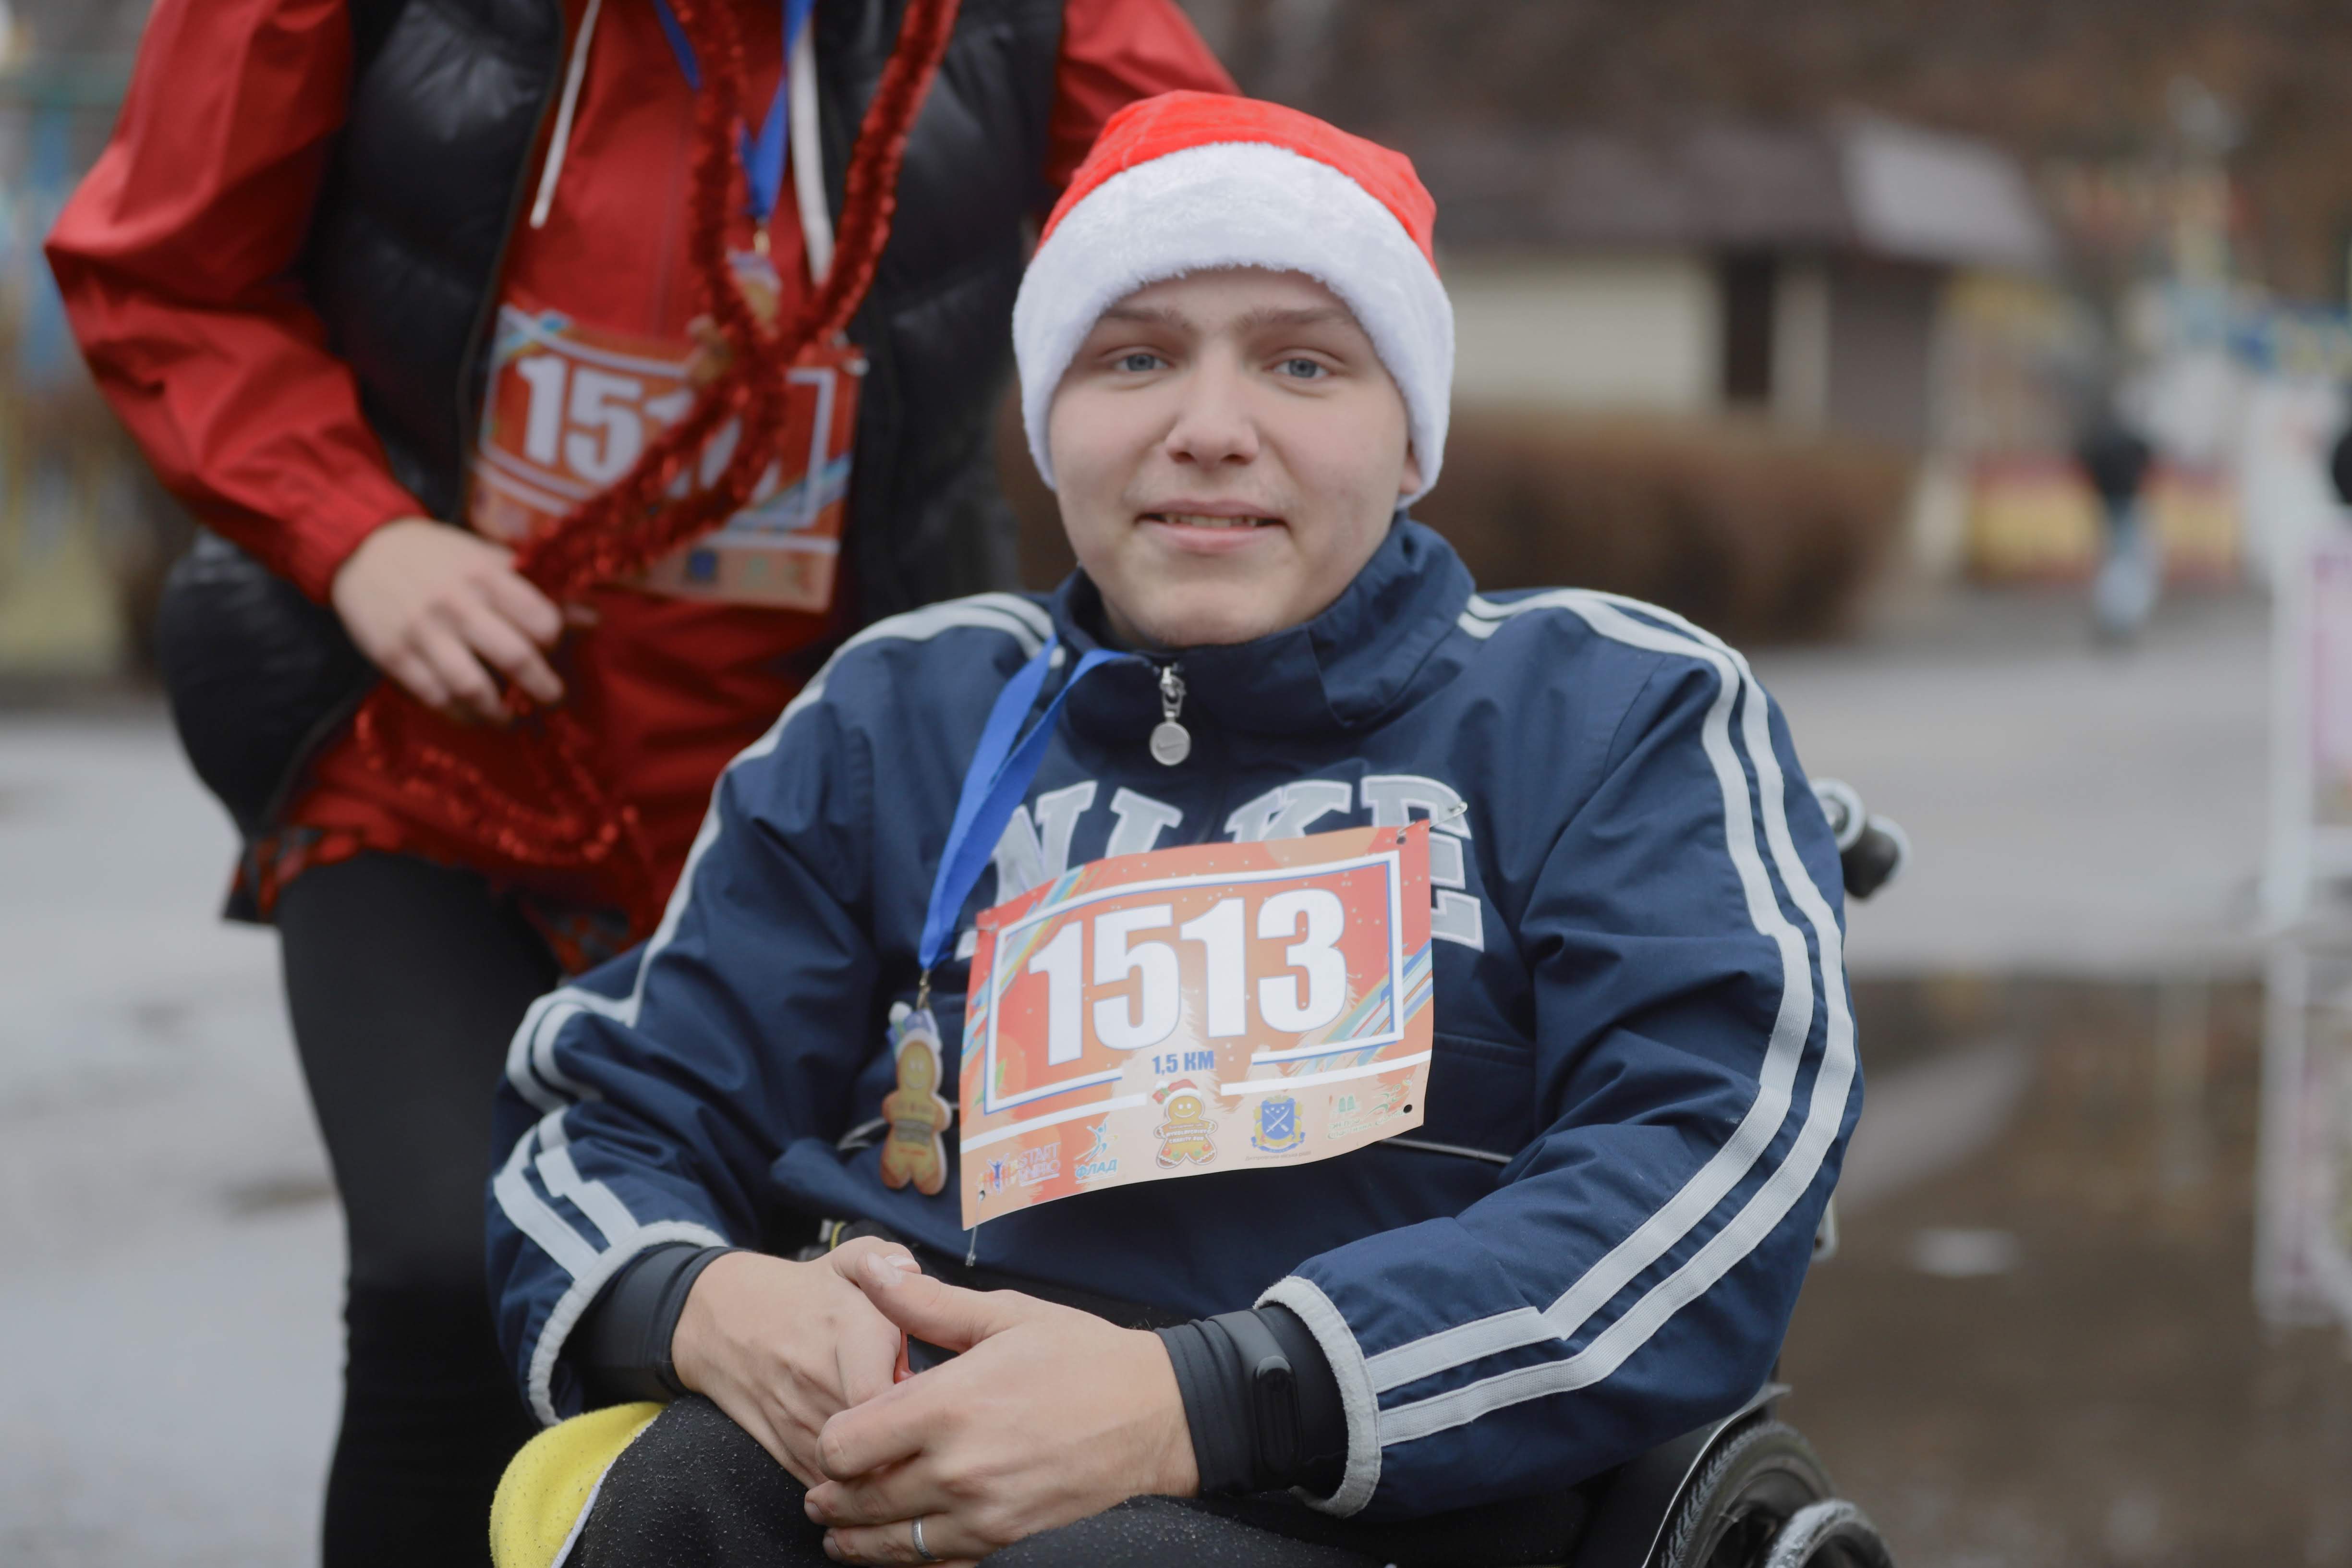  60      Mykolaychiky Charity Run      